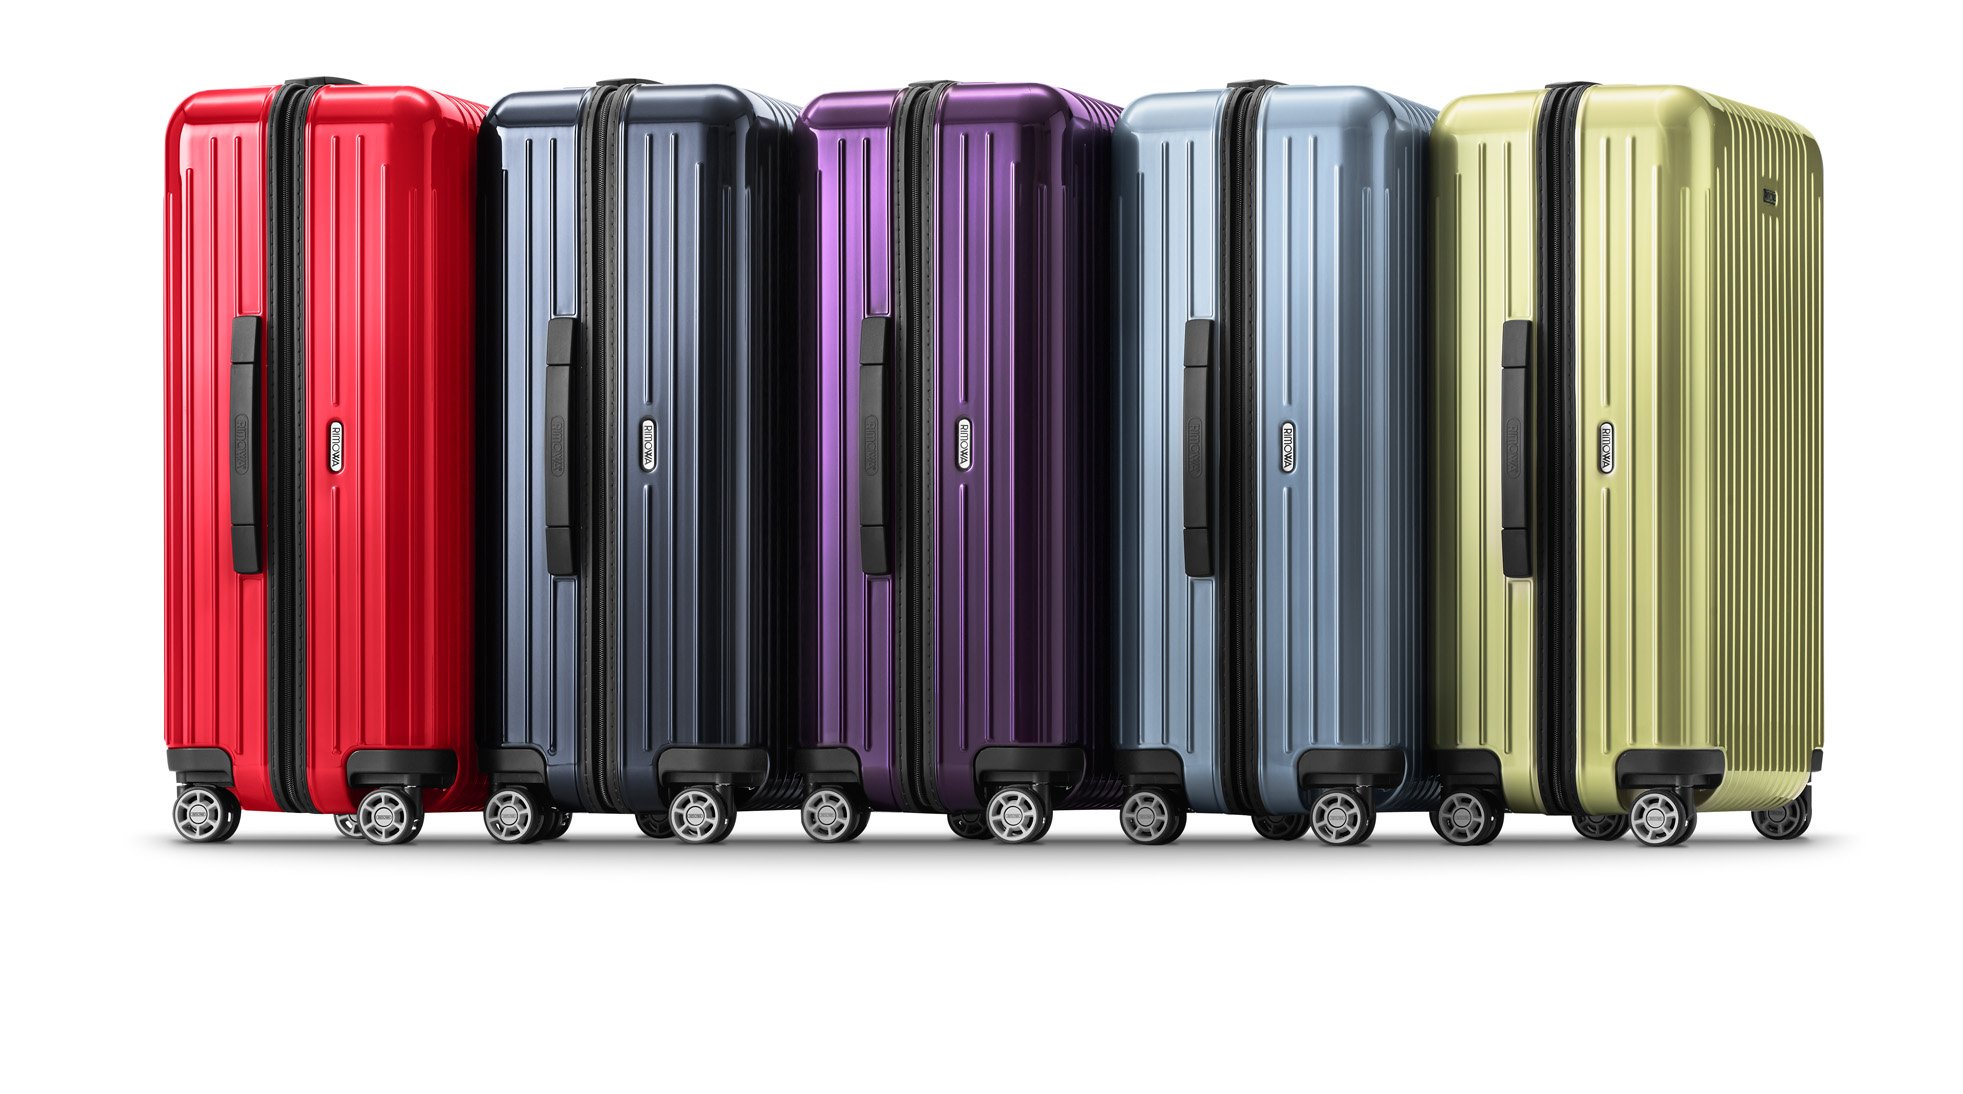 X 上的RIMOWA：「Color your summer. #Rimowa #RimowaSalsaAir #Colors #Luggage   / X